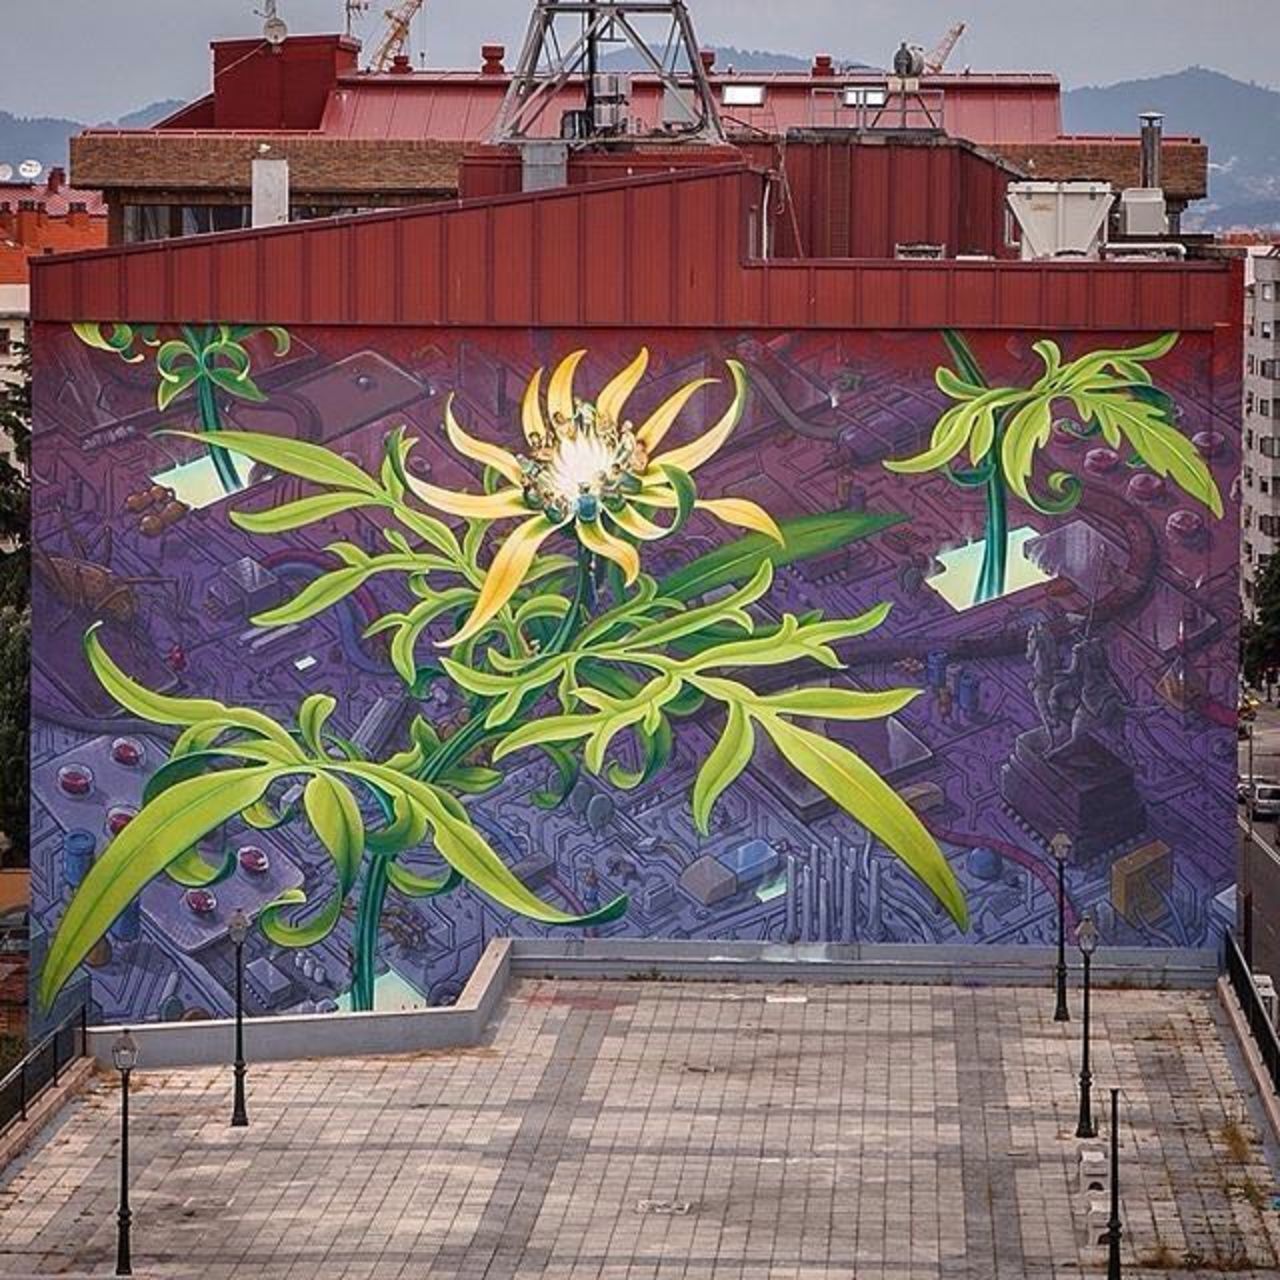 Mona Caron#streetart #mural #graffiti #art https://t.co/VXH6WNis9X